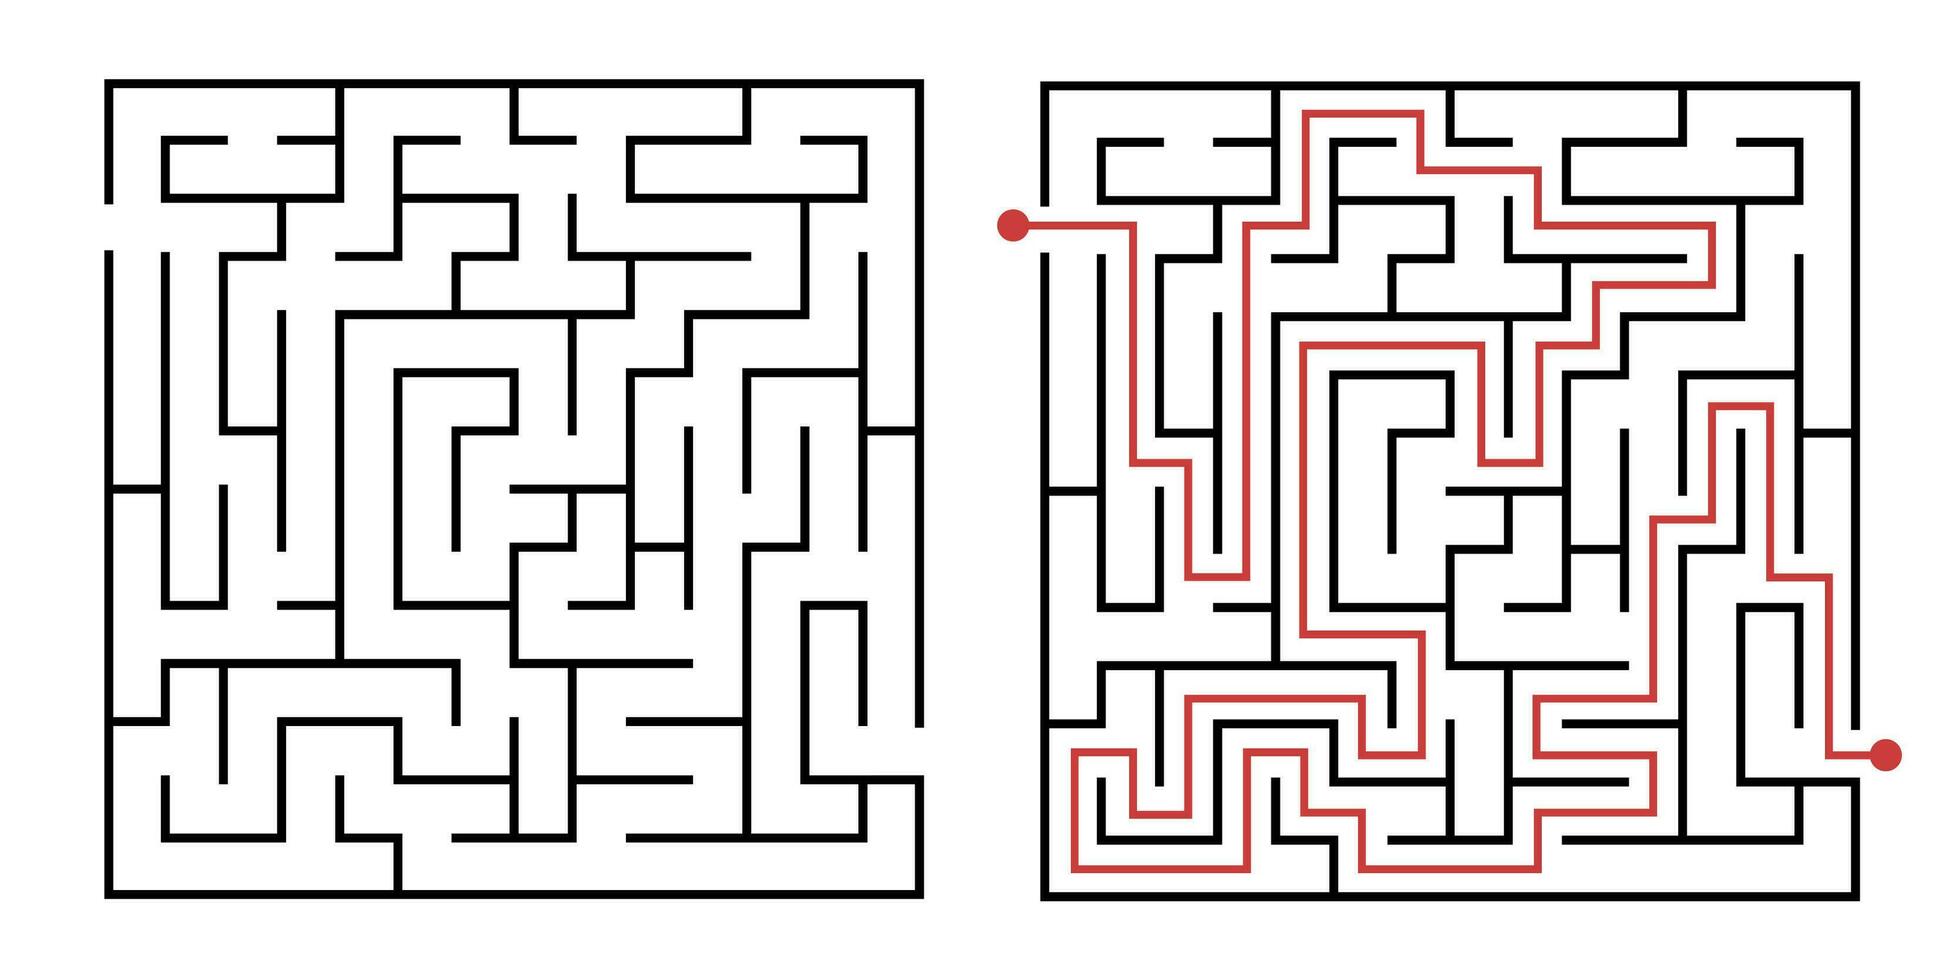 labyrint spel manier. plein doolhof, gemakkelijk logica spel met labyrinten manier vector illustratie